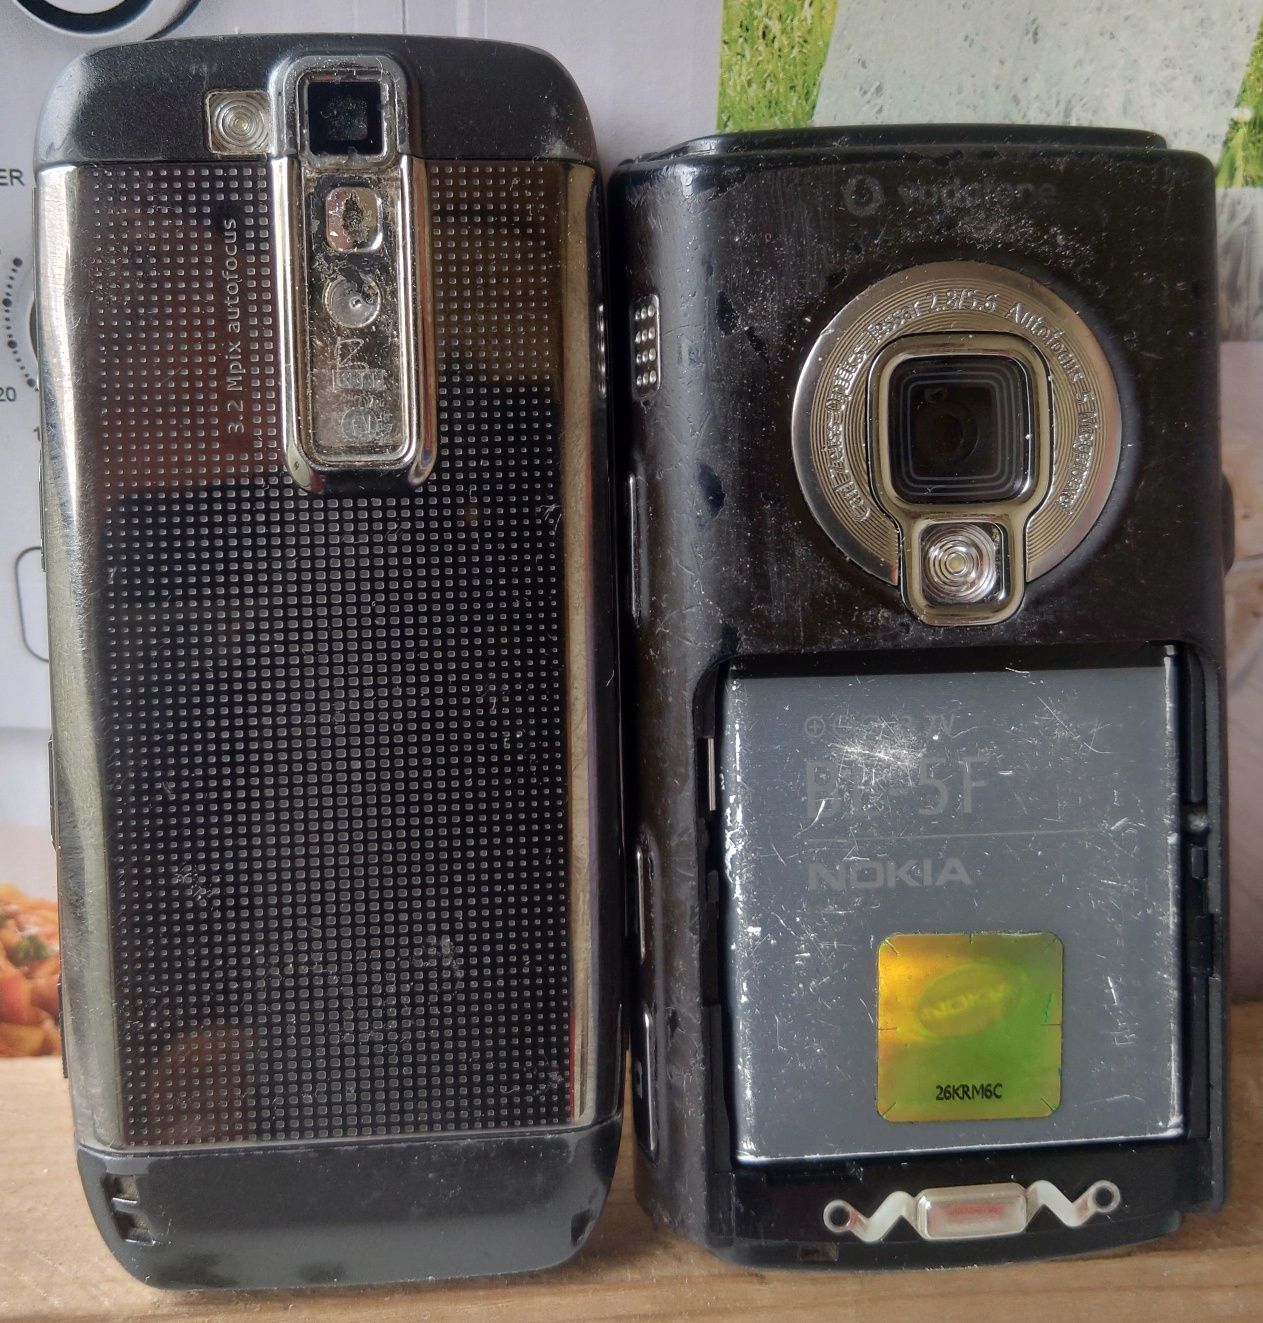 Nokia E66 & N95 colectie